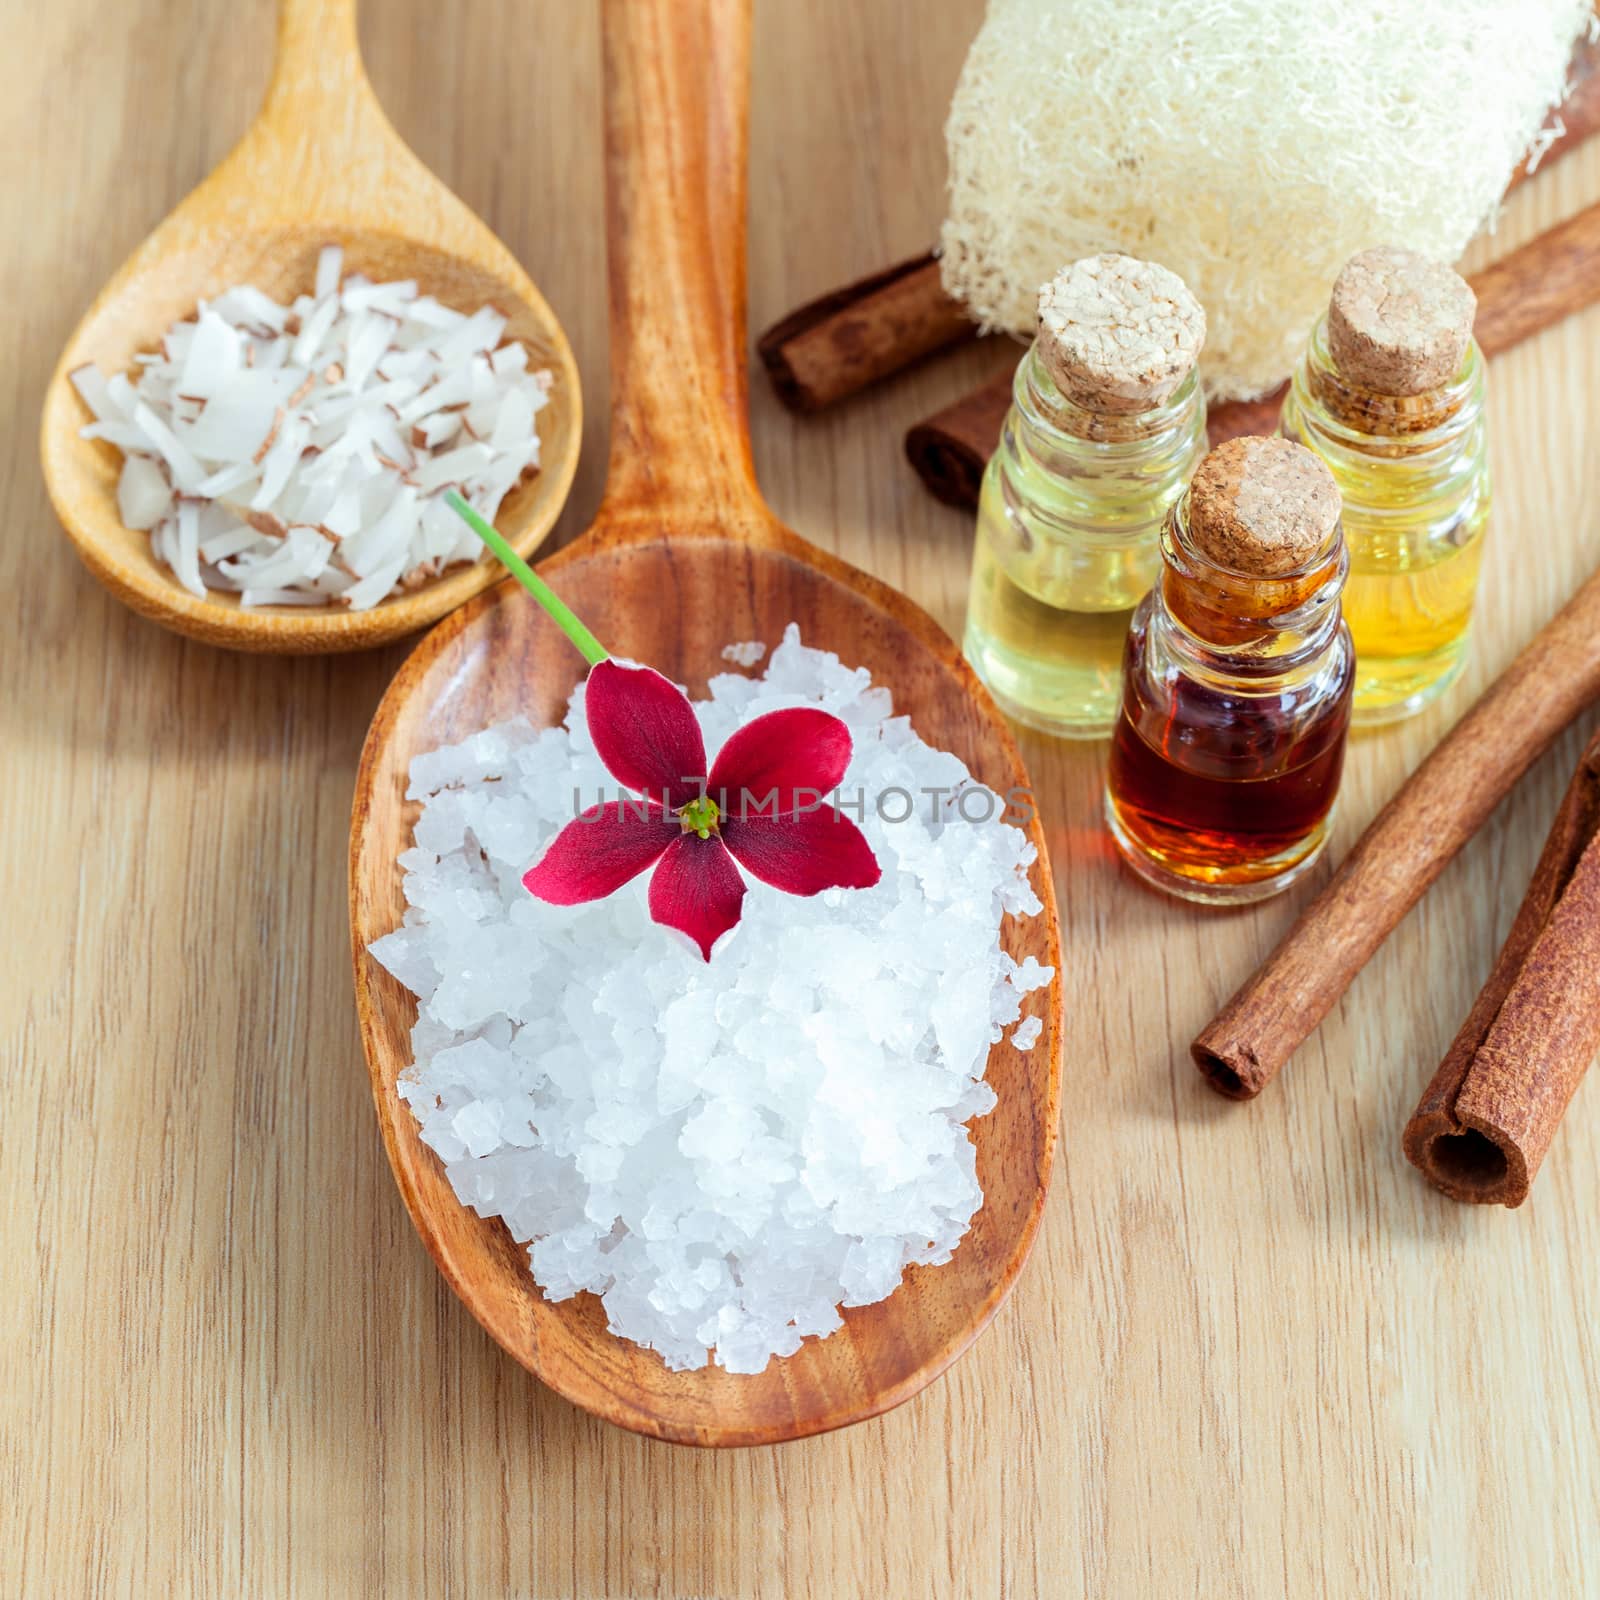 Sea Salt - Natural Spas Ingredients for skin care. by kerdkanno